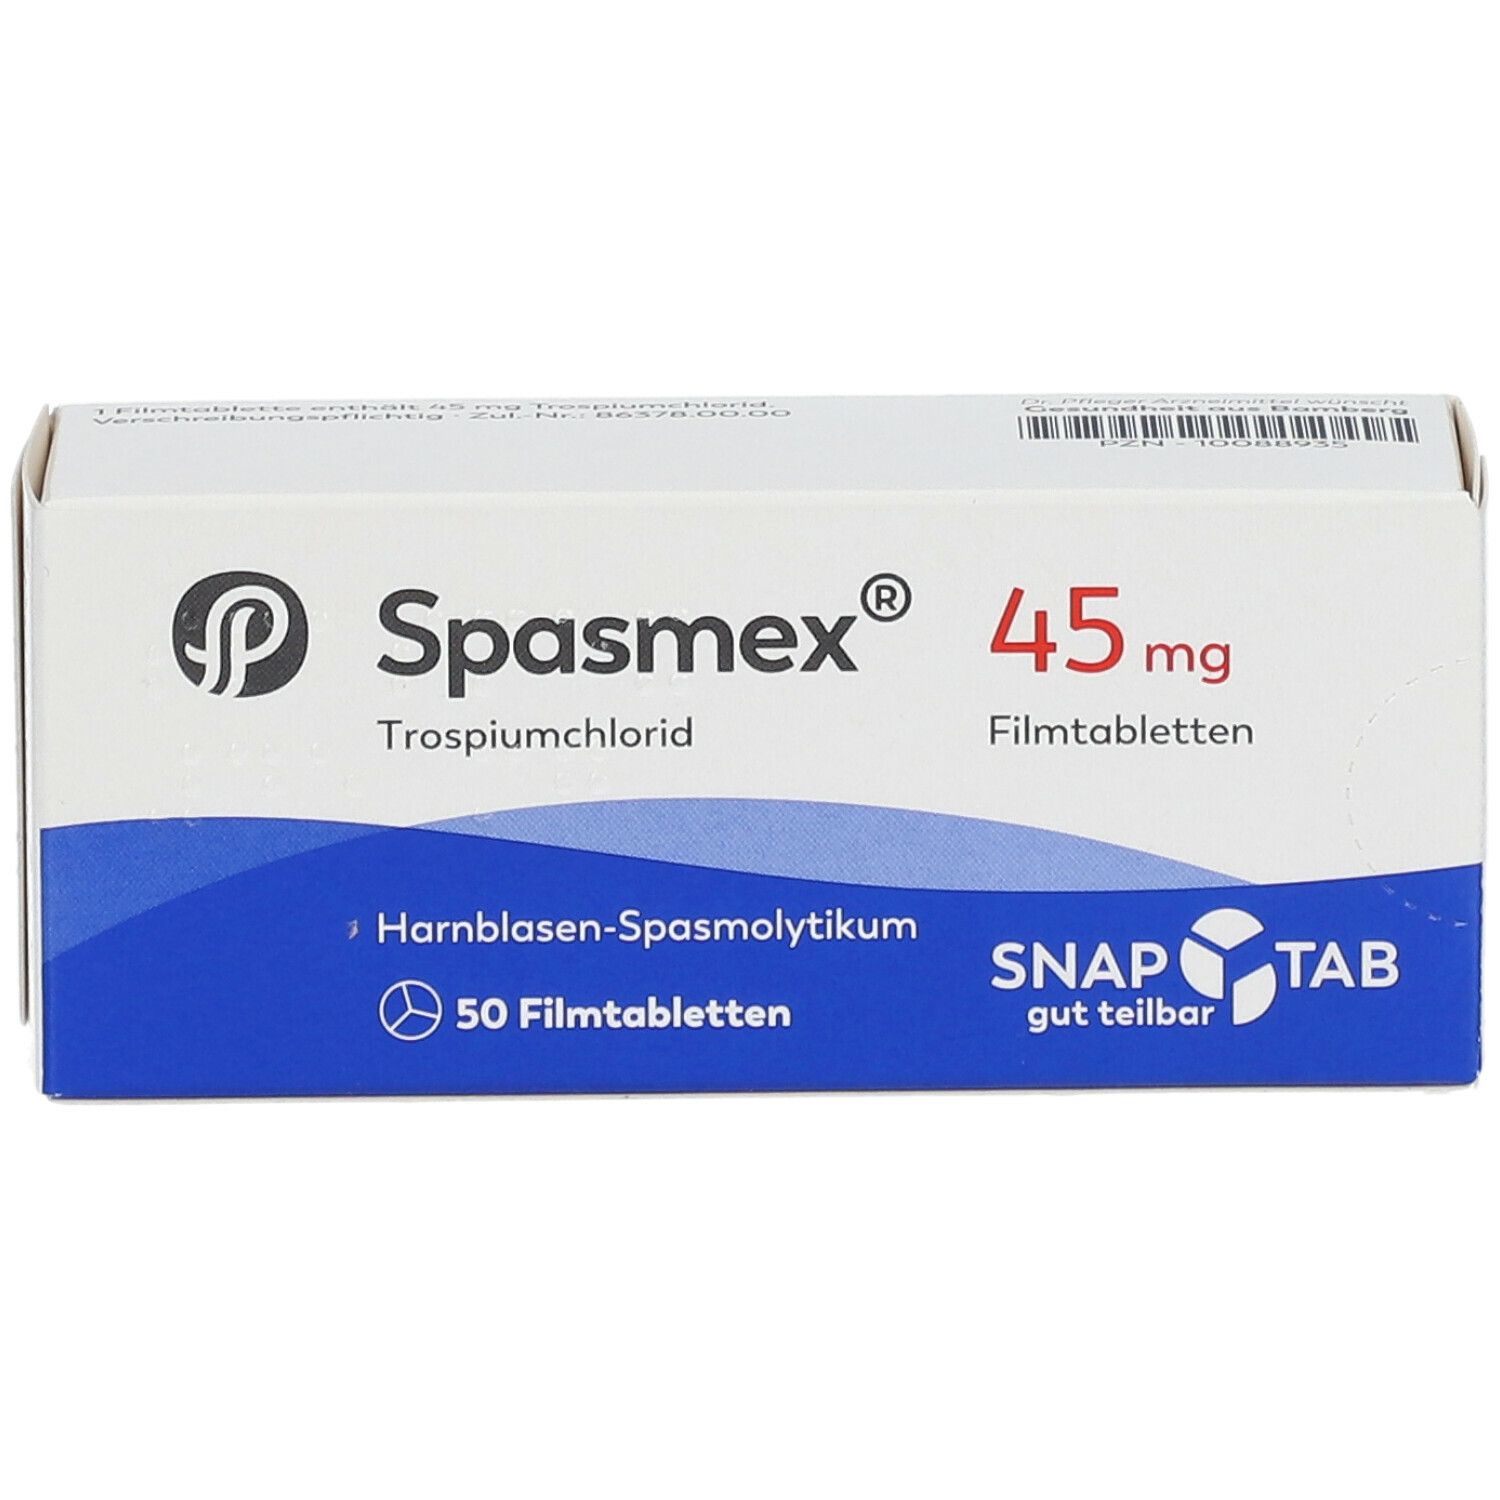 Spasmex® 45 mg